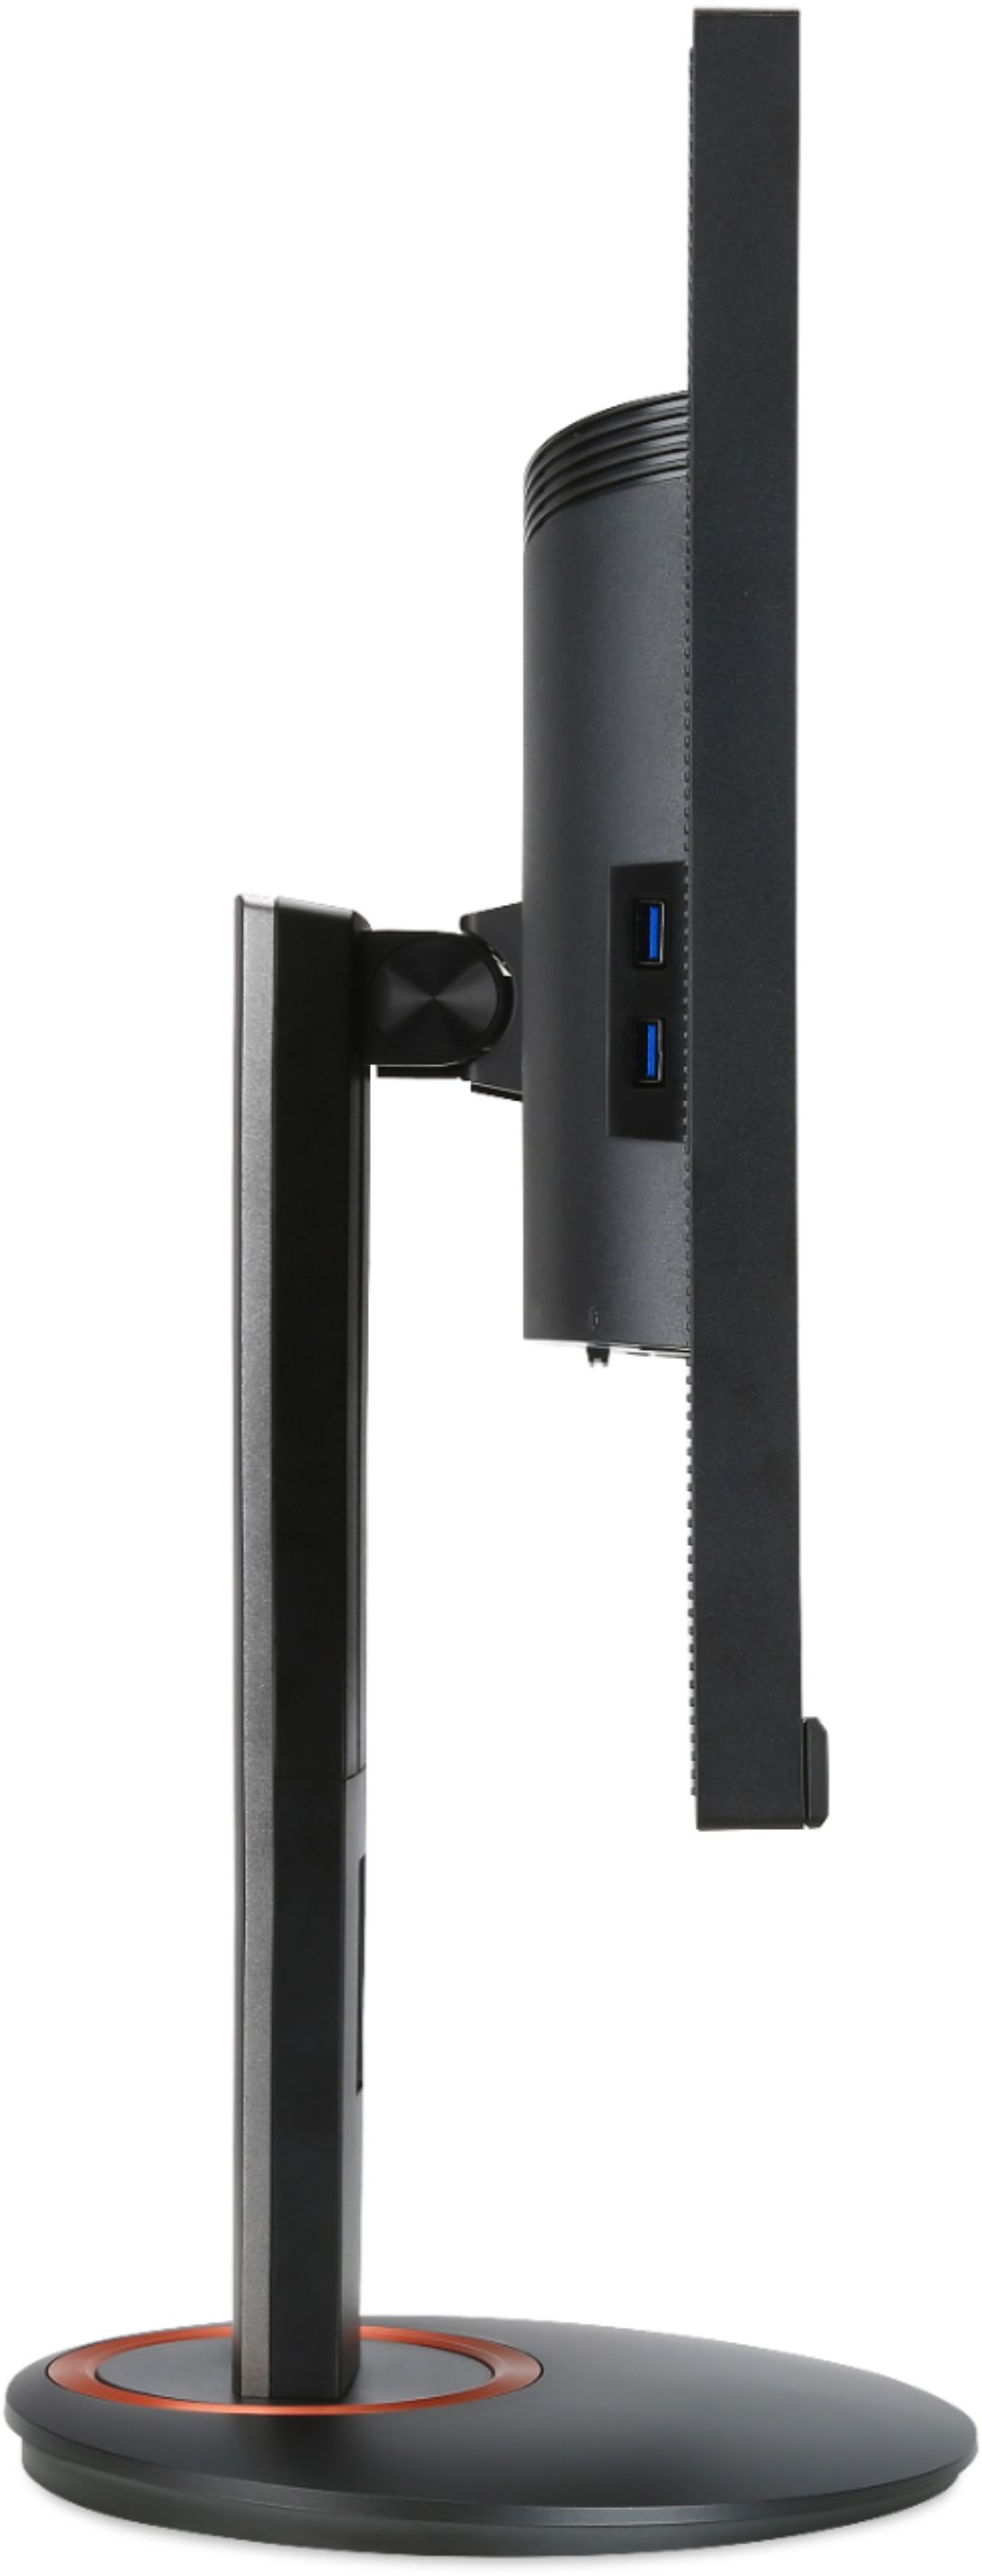 korrelat gentage Manners Best Buy: Acer 27" IPS LED QHD FreeSync Monitor (DVI, HDMI) Black XF270HU